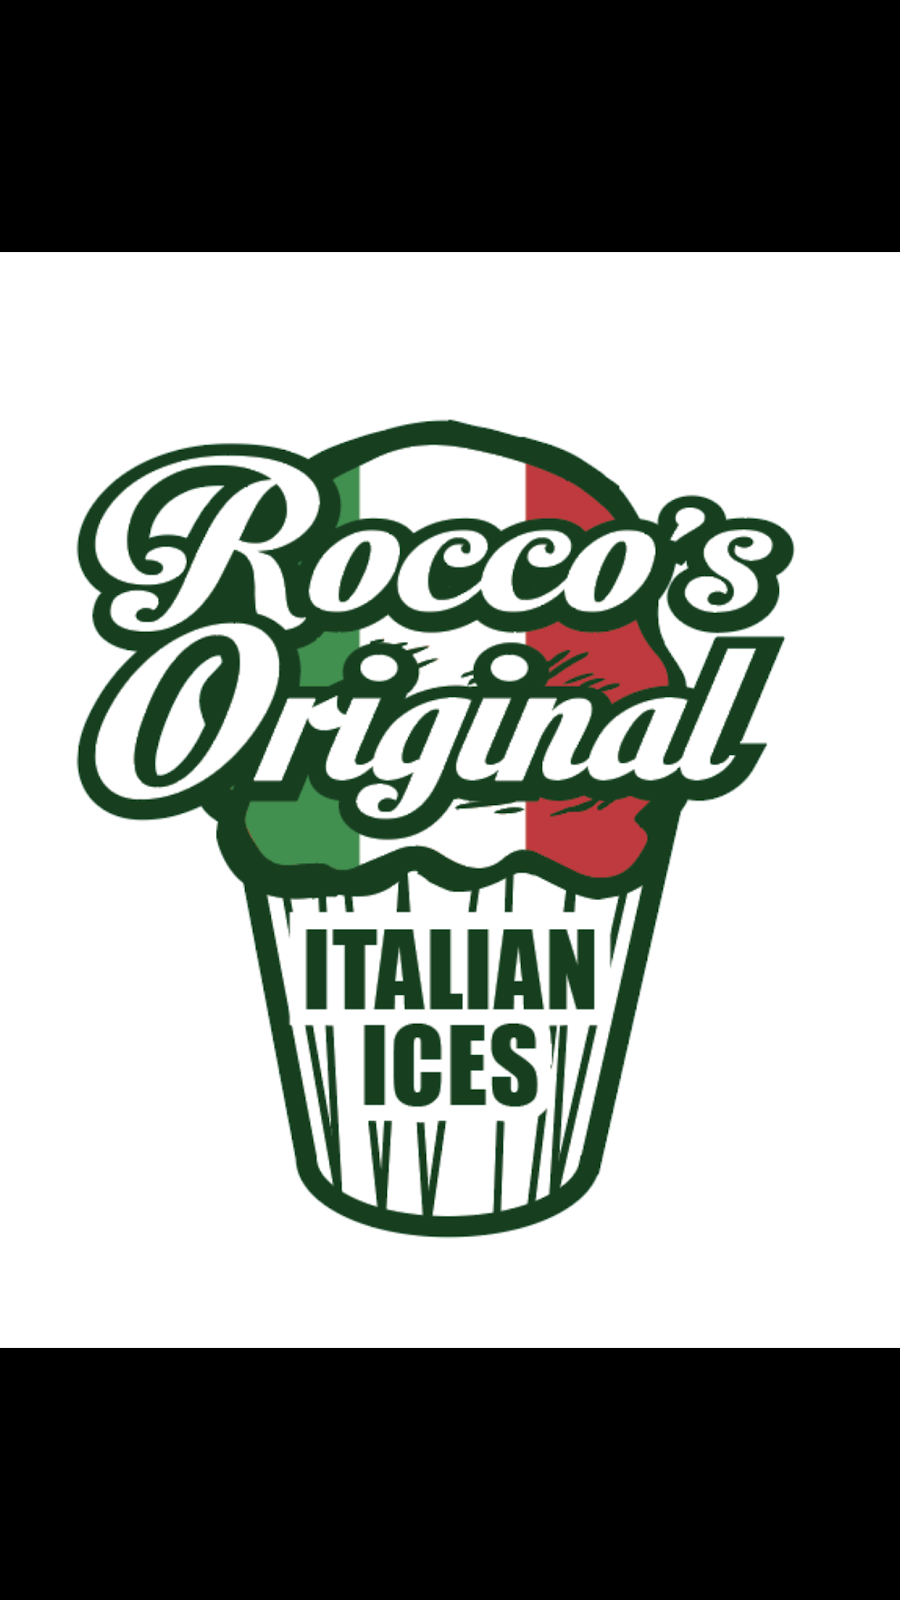 Rocco’s Original Italian Ices | 53 Carr Ave, Keansburg, NJ 07734 | Phone: (646) 226-8763